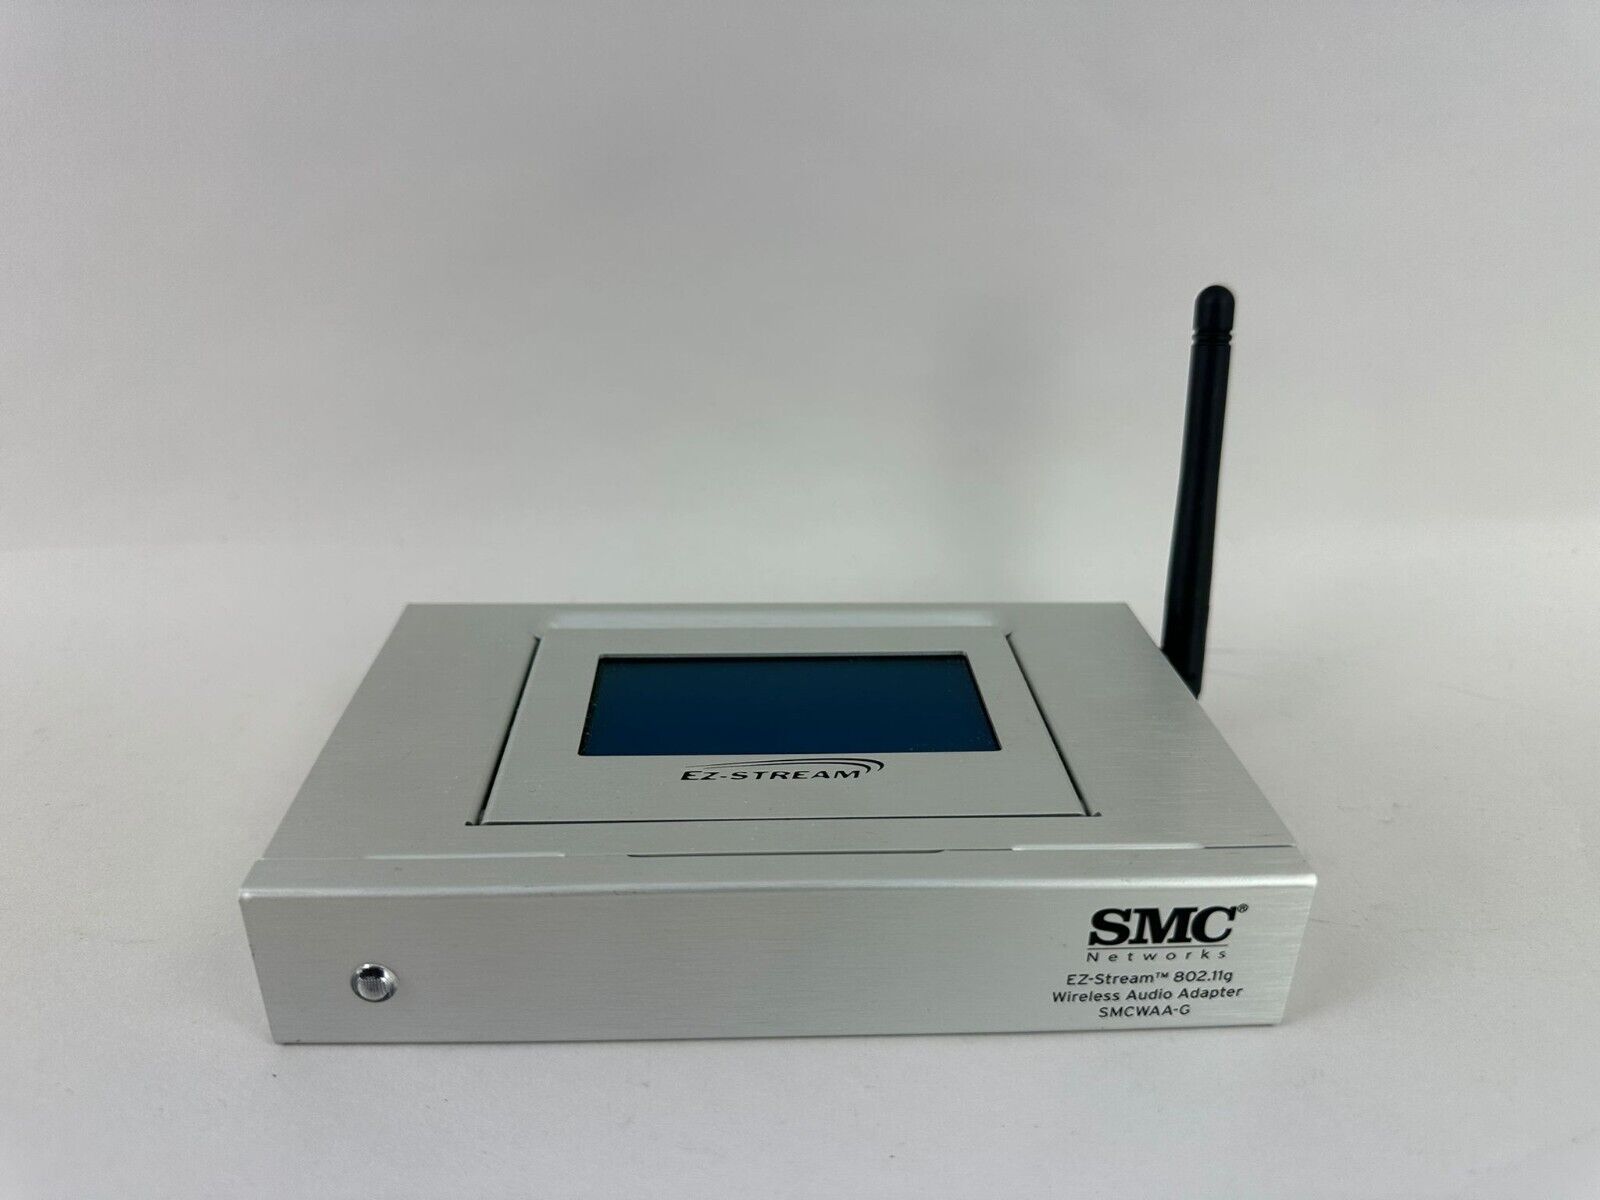 SMC Networks EZ-Stream 802.11g Wireless Audio Adapter SMCWAA-G